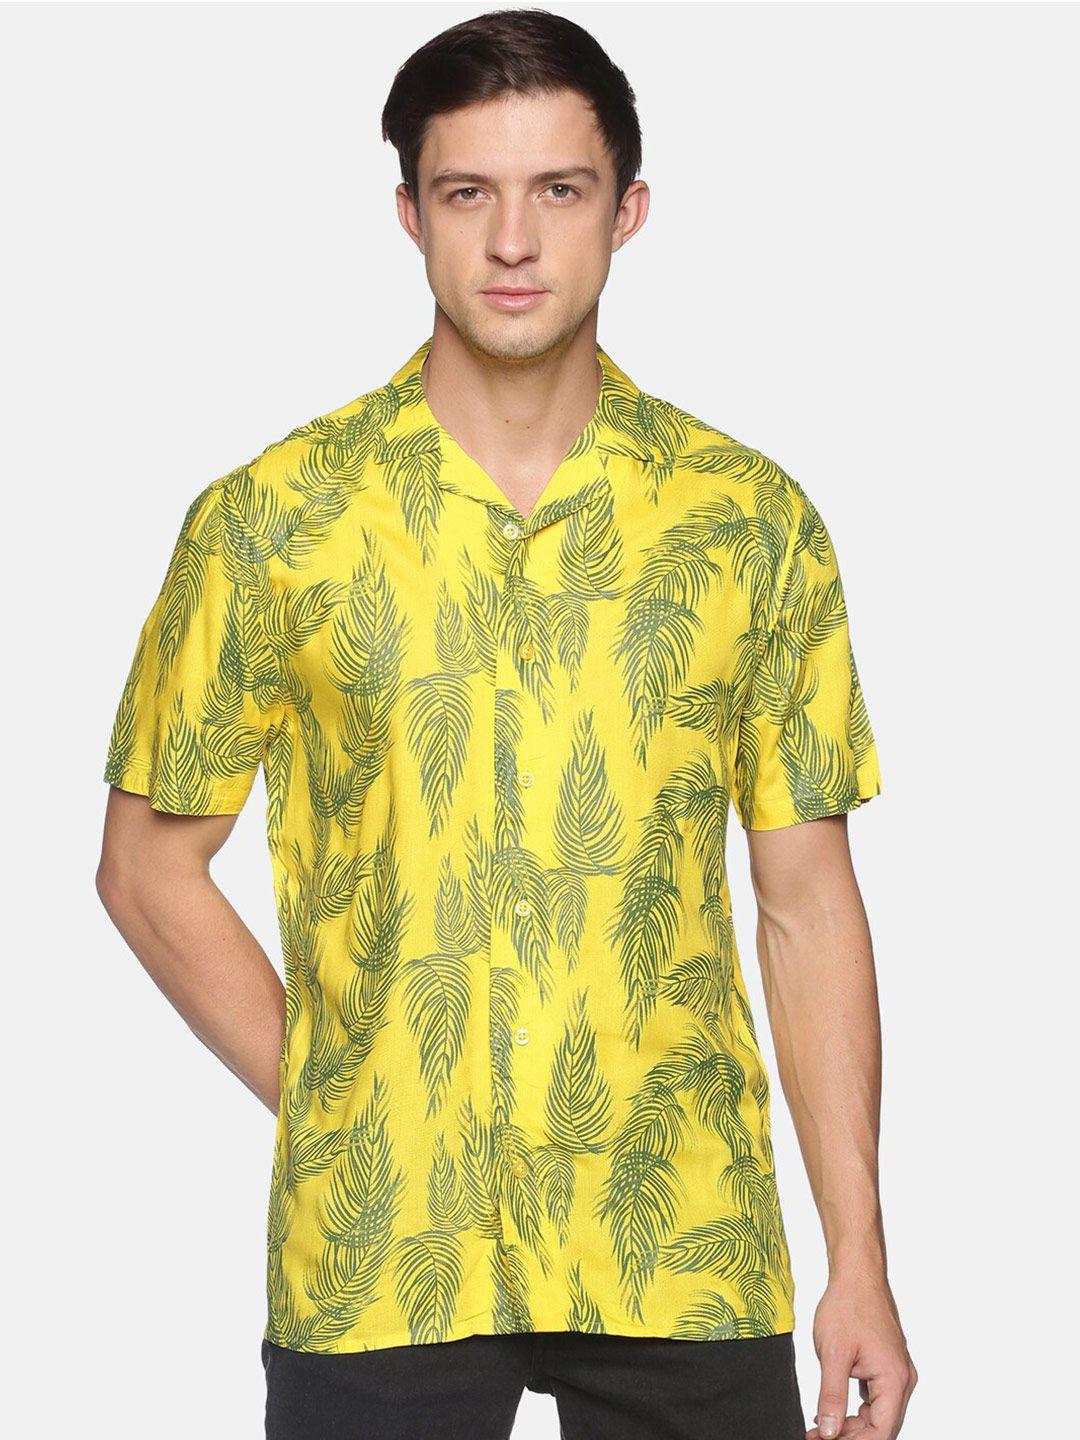 steenbok-tropical-printed-cuban-collar-cotton-casual-shirt